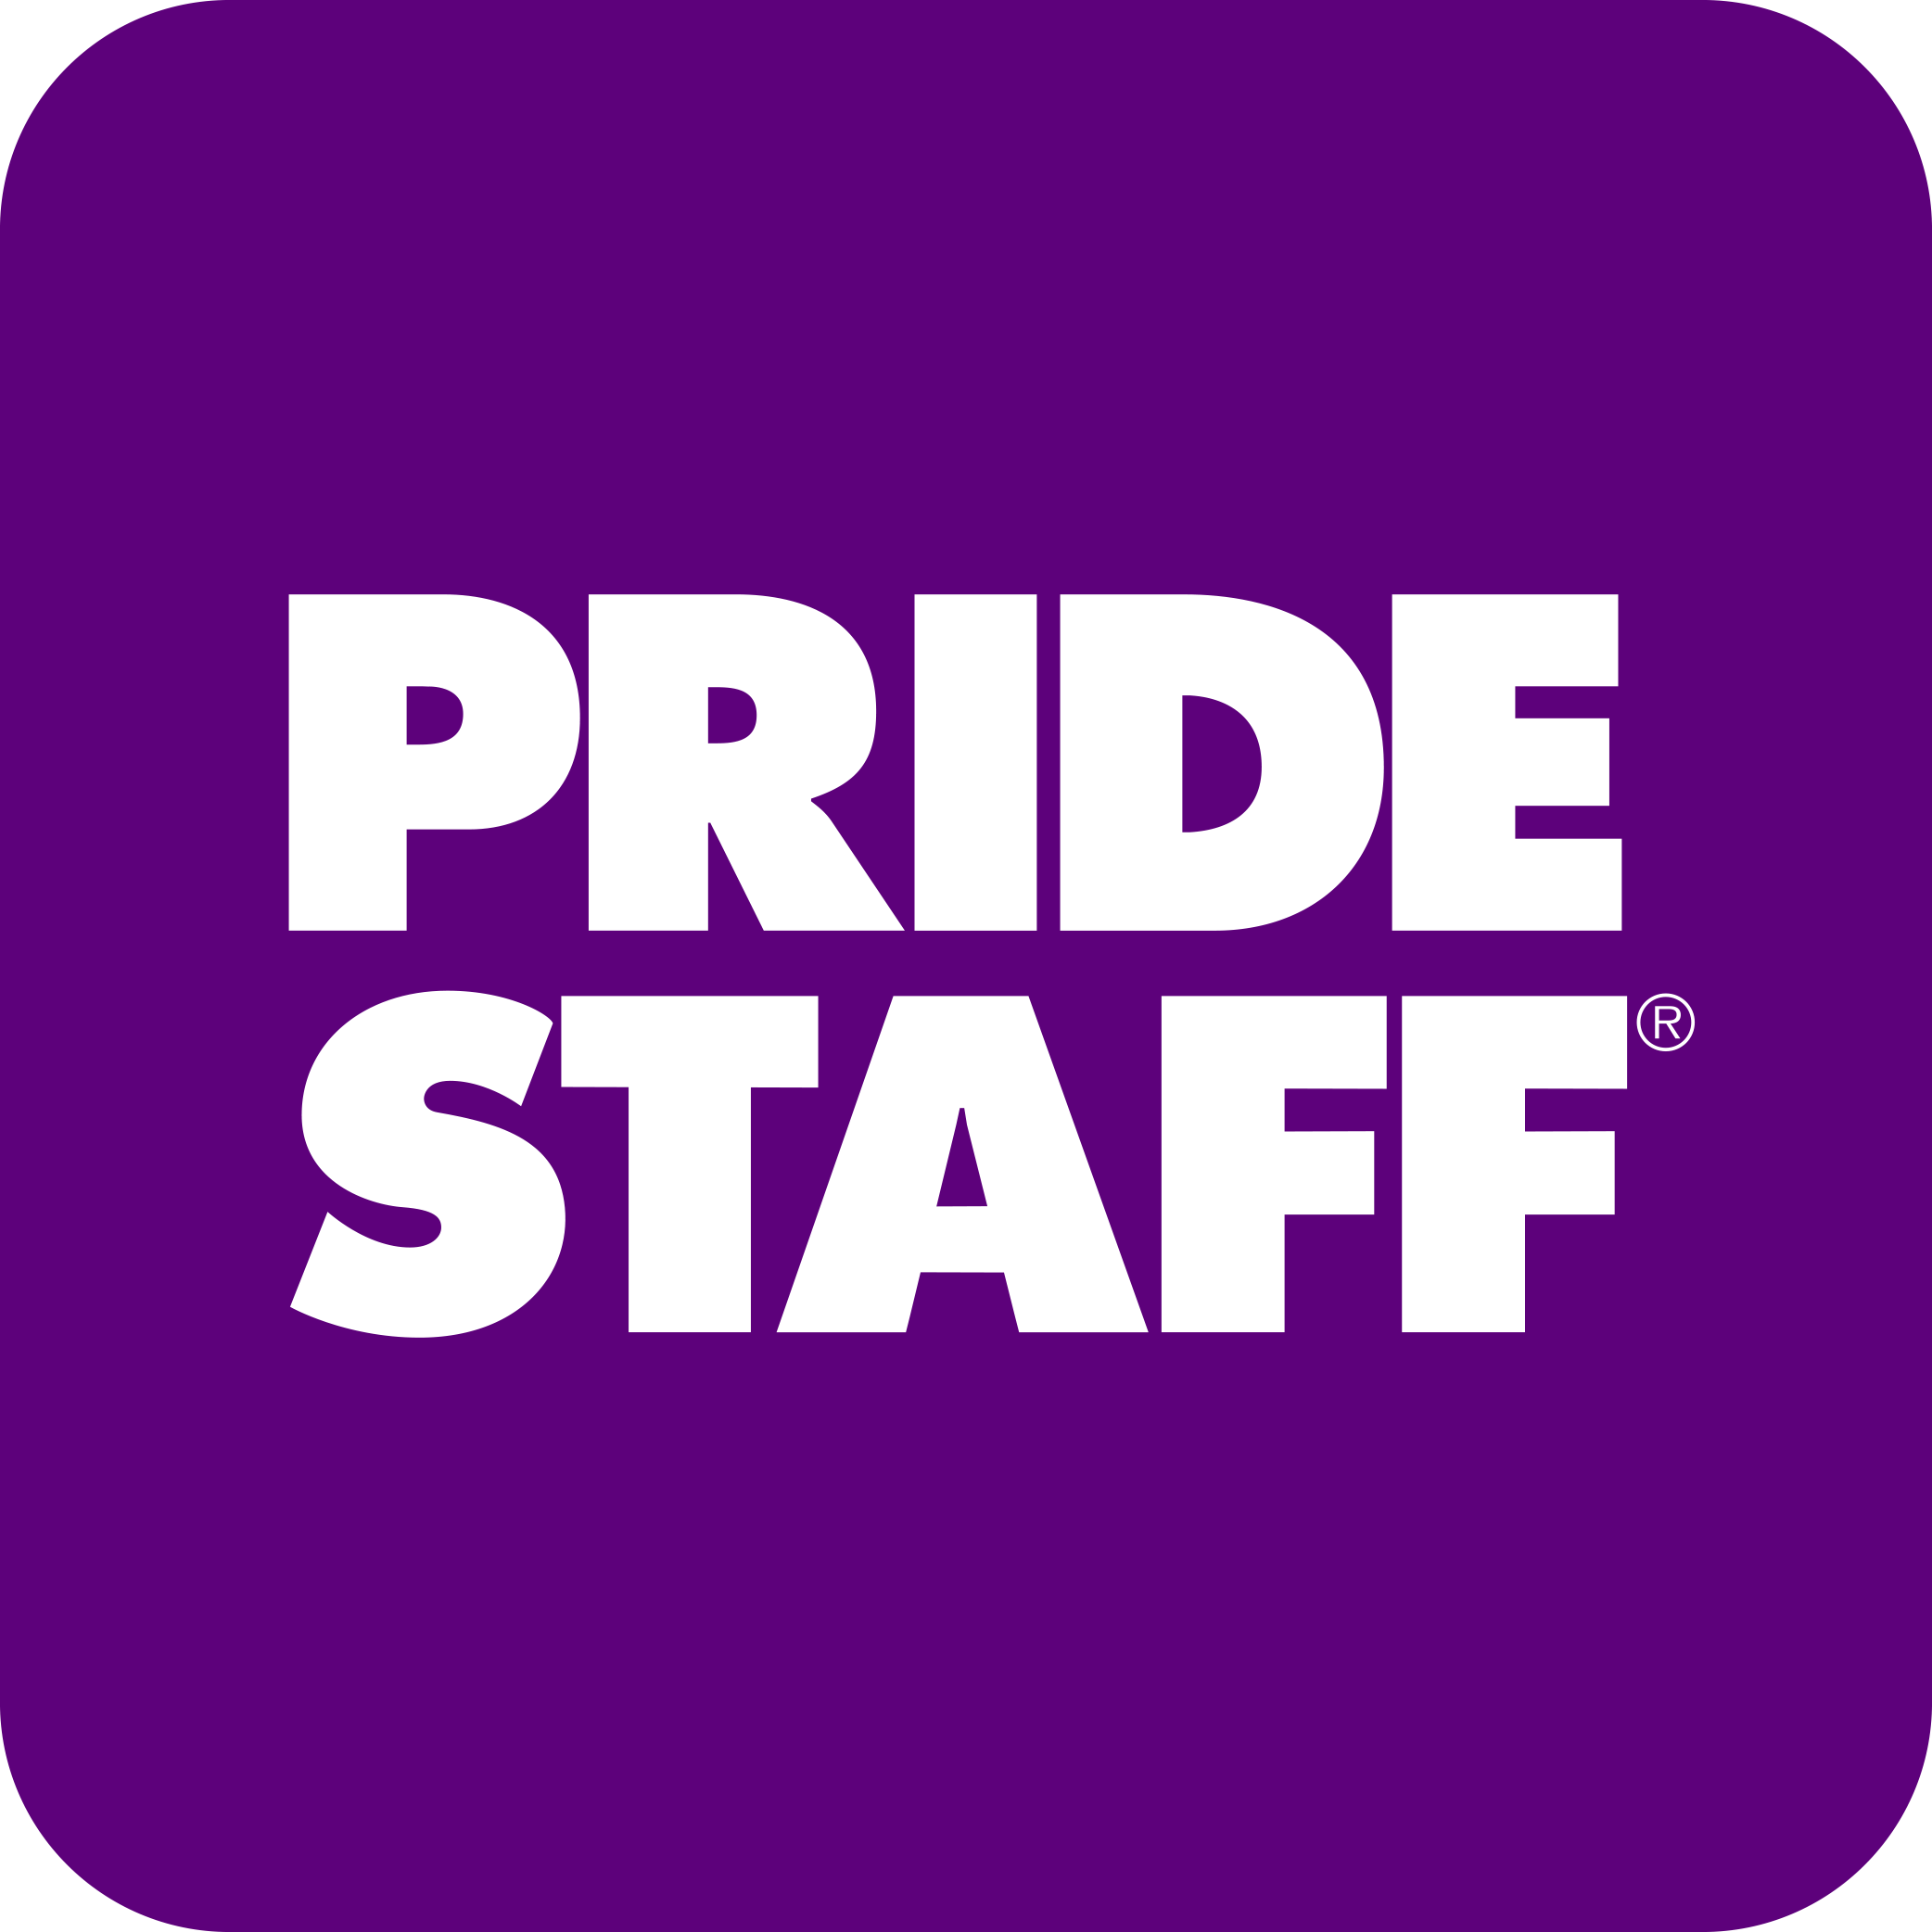 PrideStaff Rounded Square logo PrideStaff Westlake Village (805)813-8431